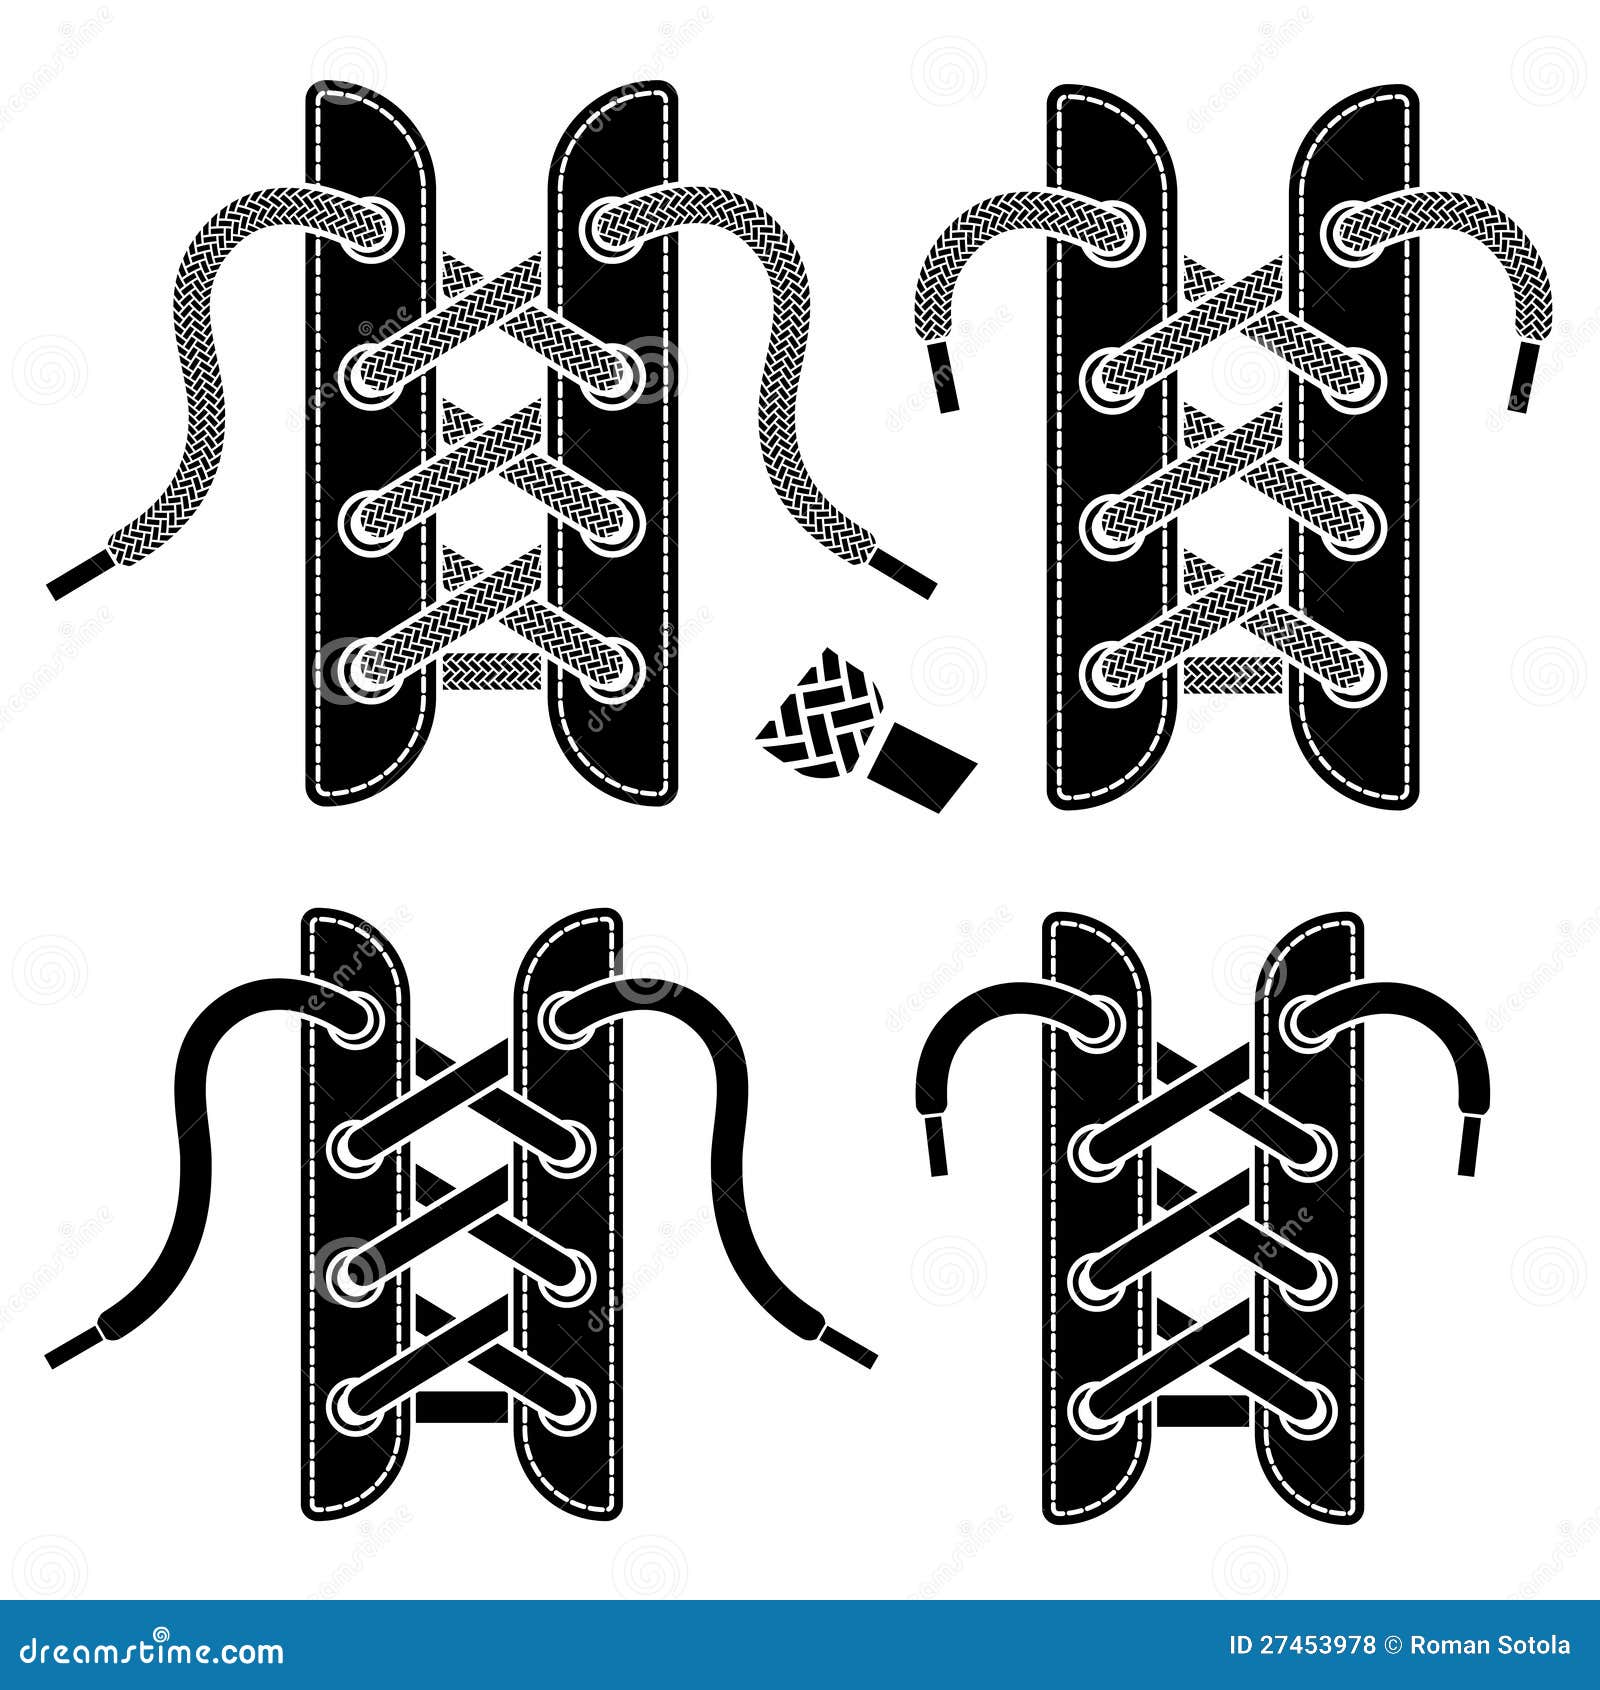 Shoe lace symbols stock vector. Illustration of classic - 27453978